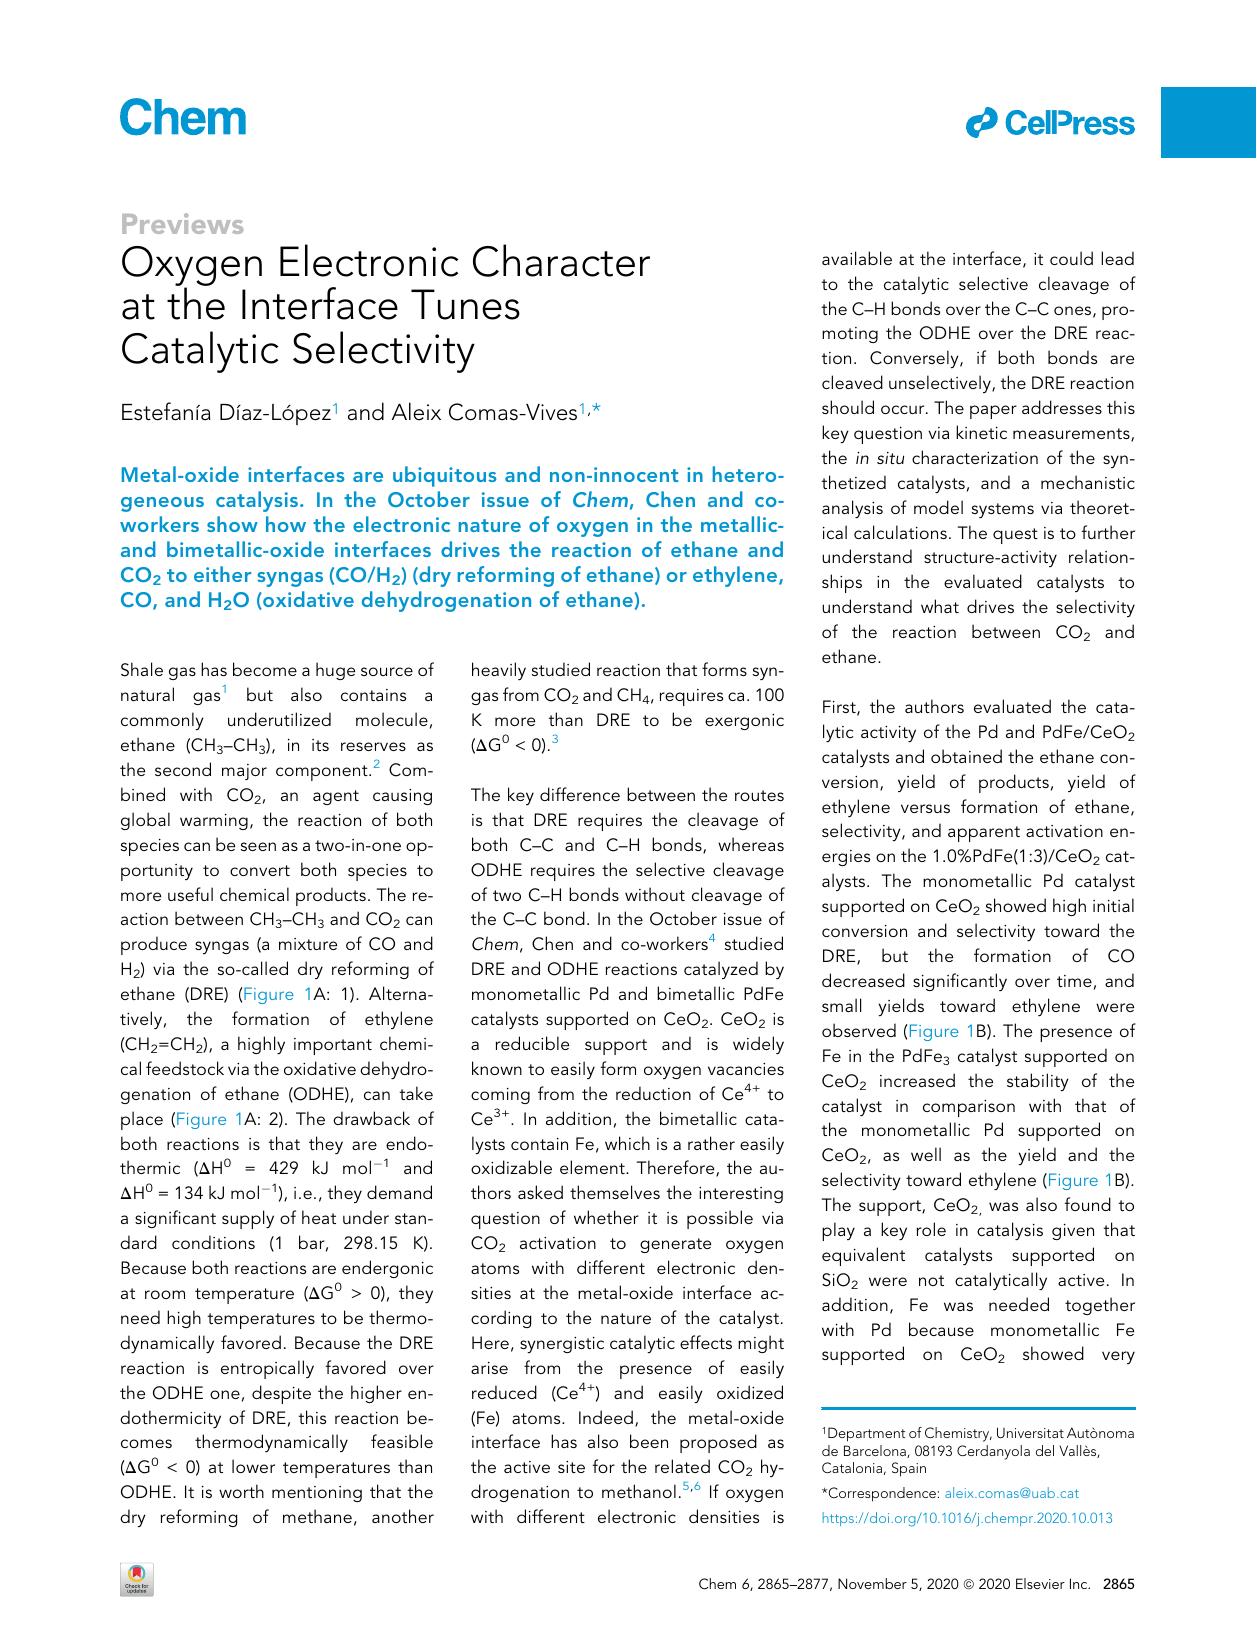 Oxygen Electronic Character at the Interface Tunes Catalytic Selectivity by Estefanía Díaz-López & Aleix Comas-Vives